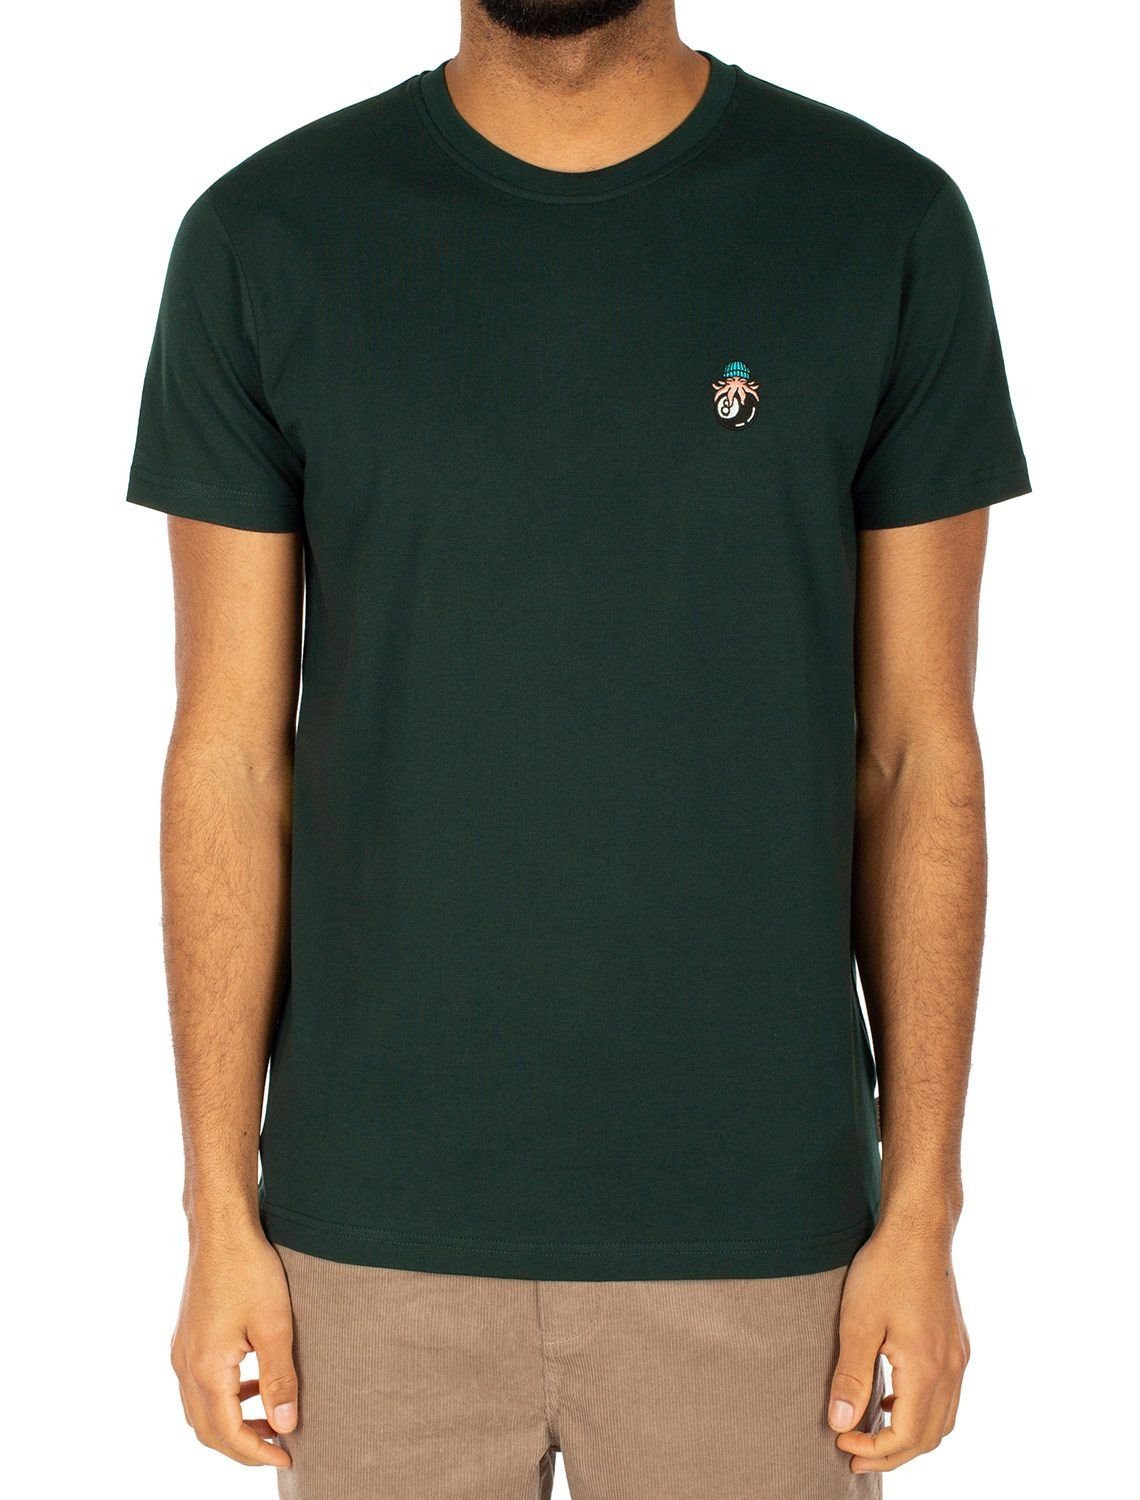 iriedaily T-Shirt Herren online kaufen | OTTO